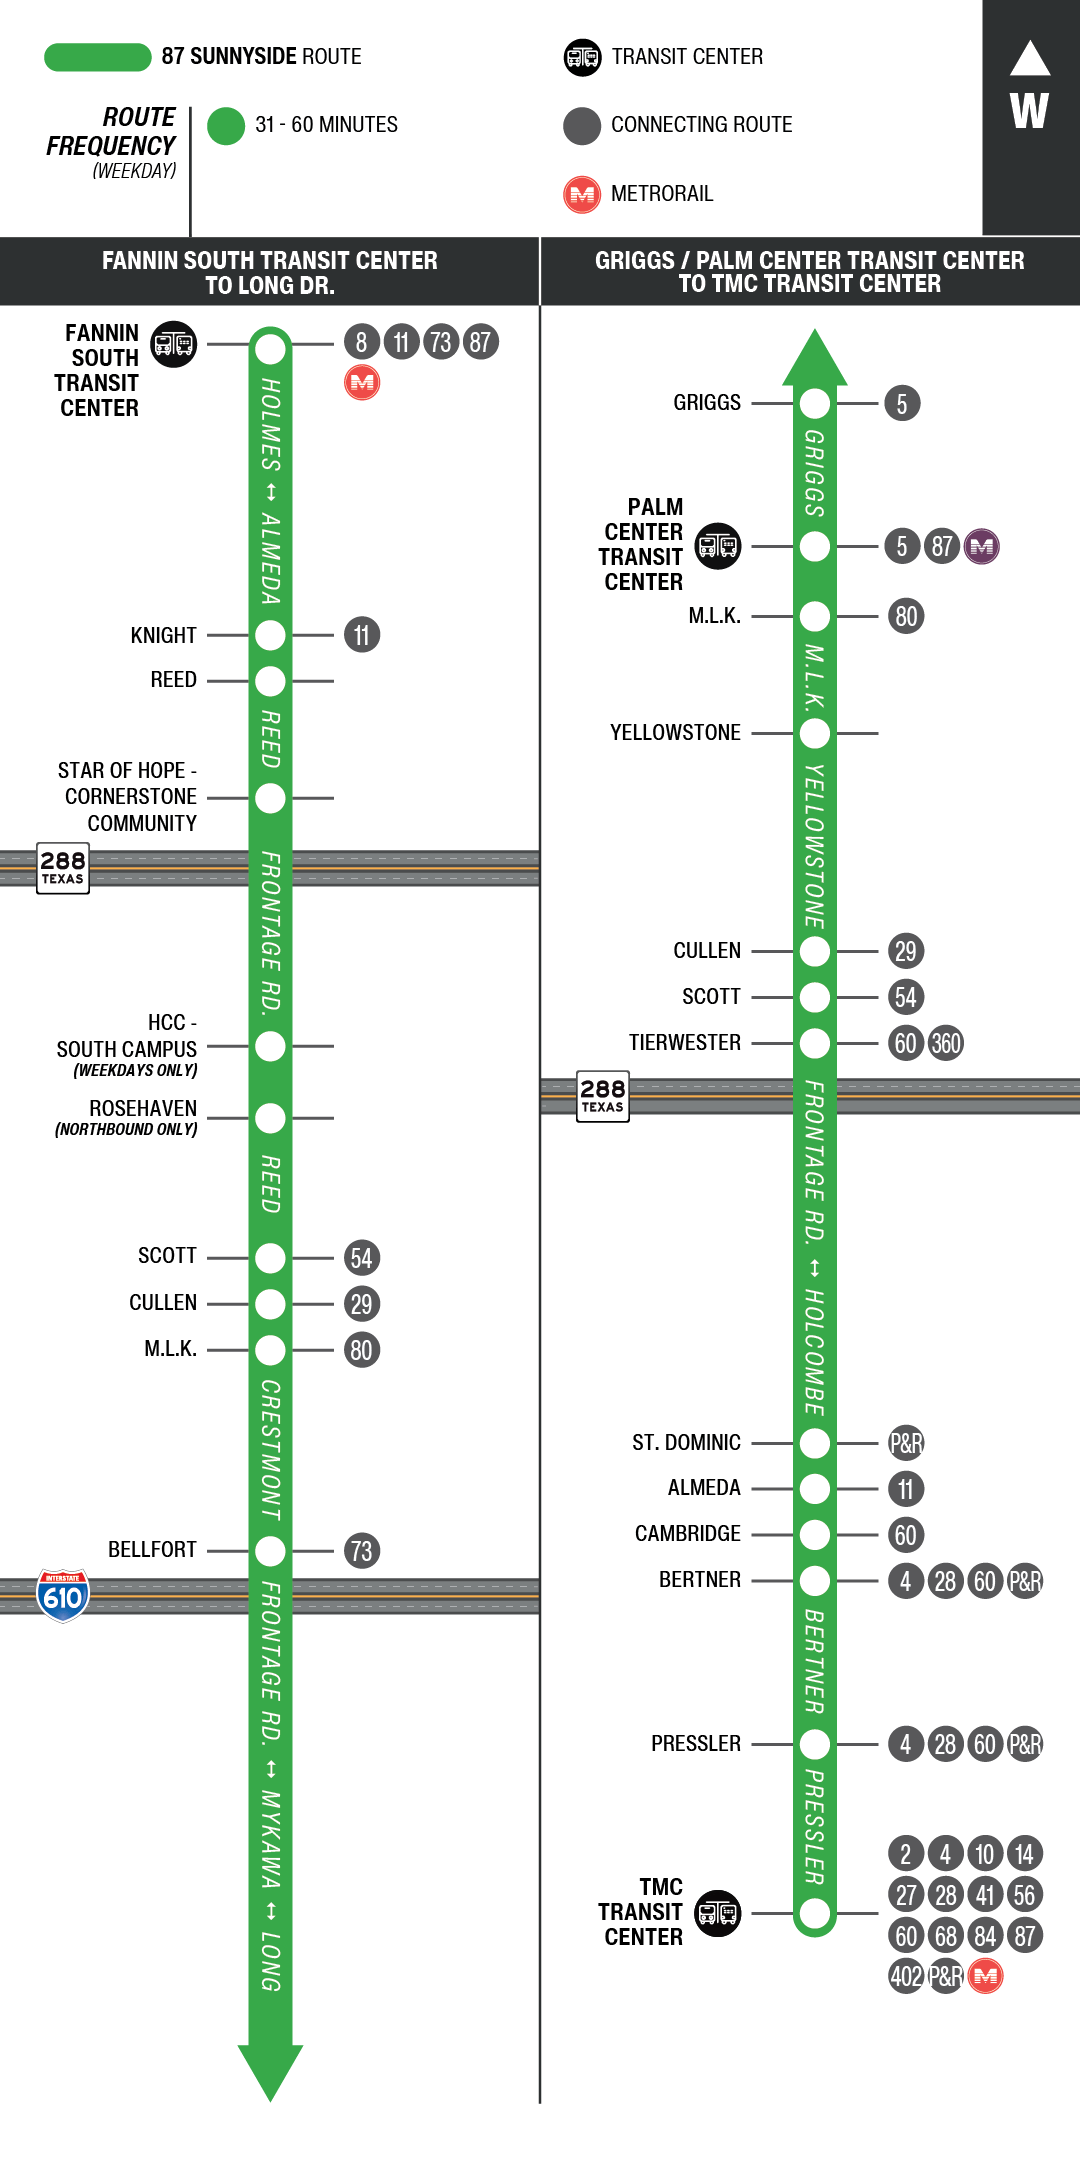 Route map for 87 Sunnyside bus